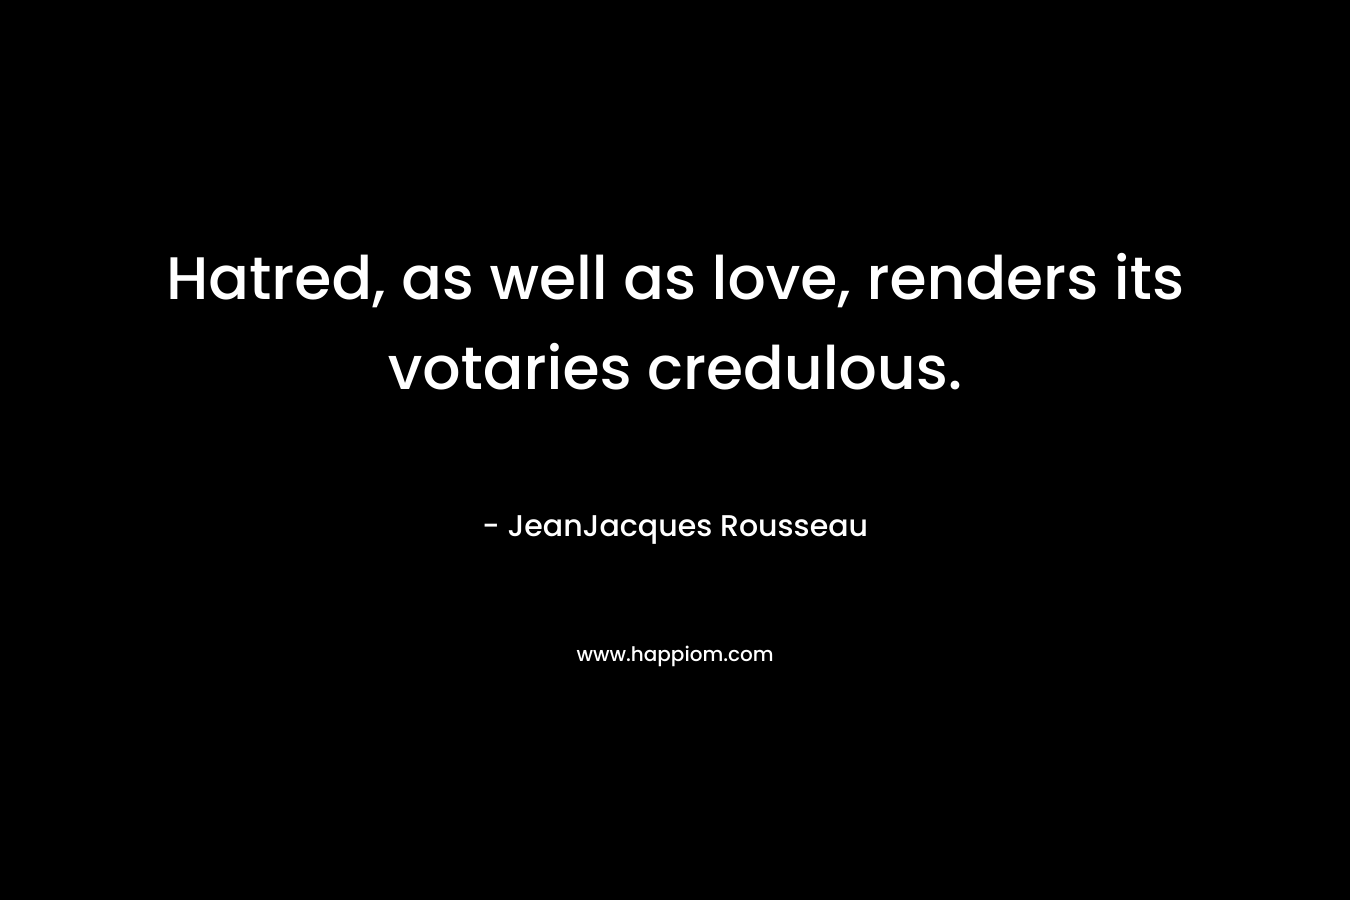 Hatred, as well as love, renders its votaries credulous.